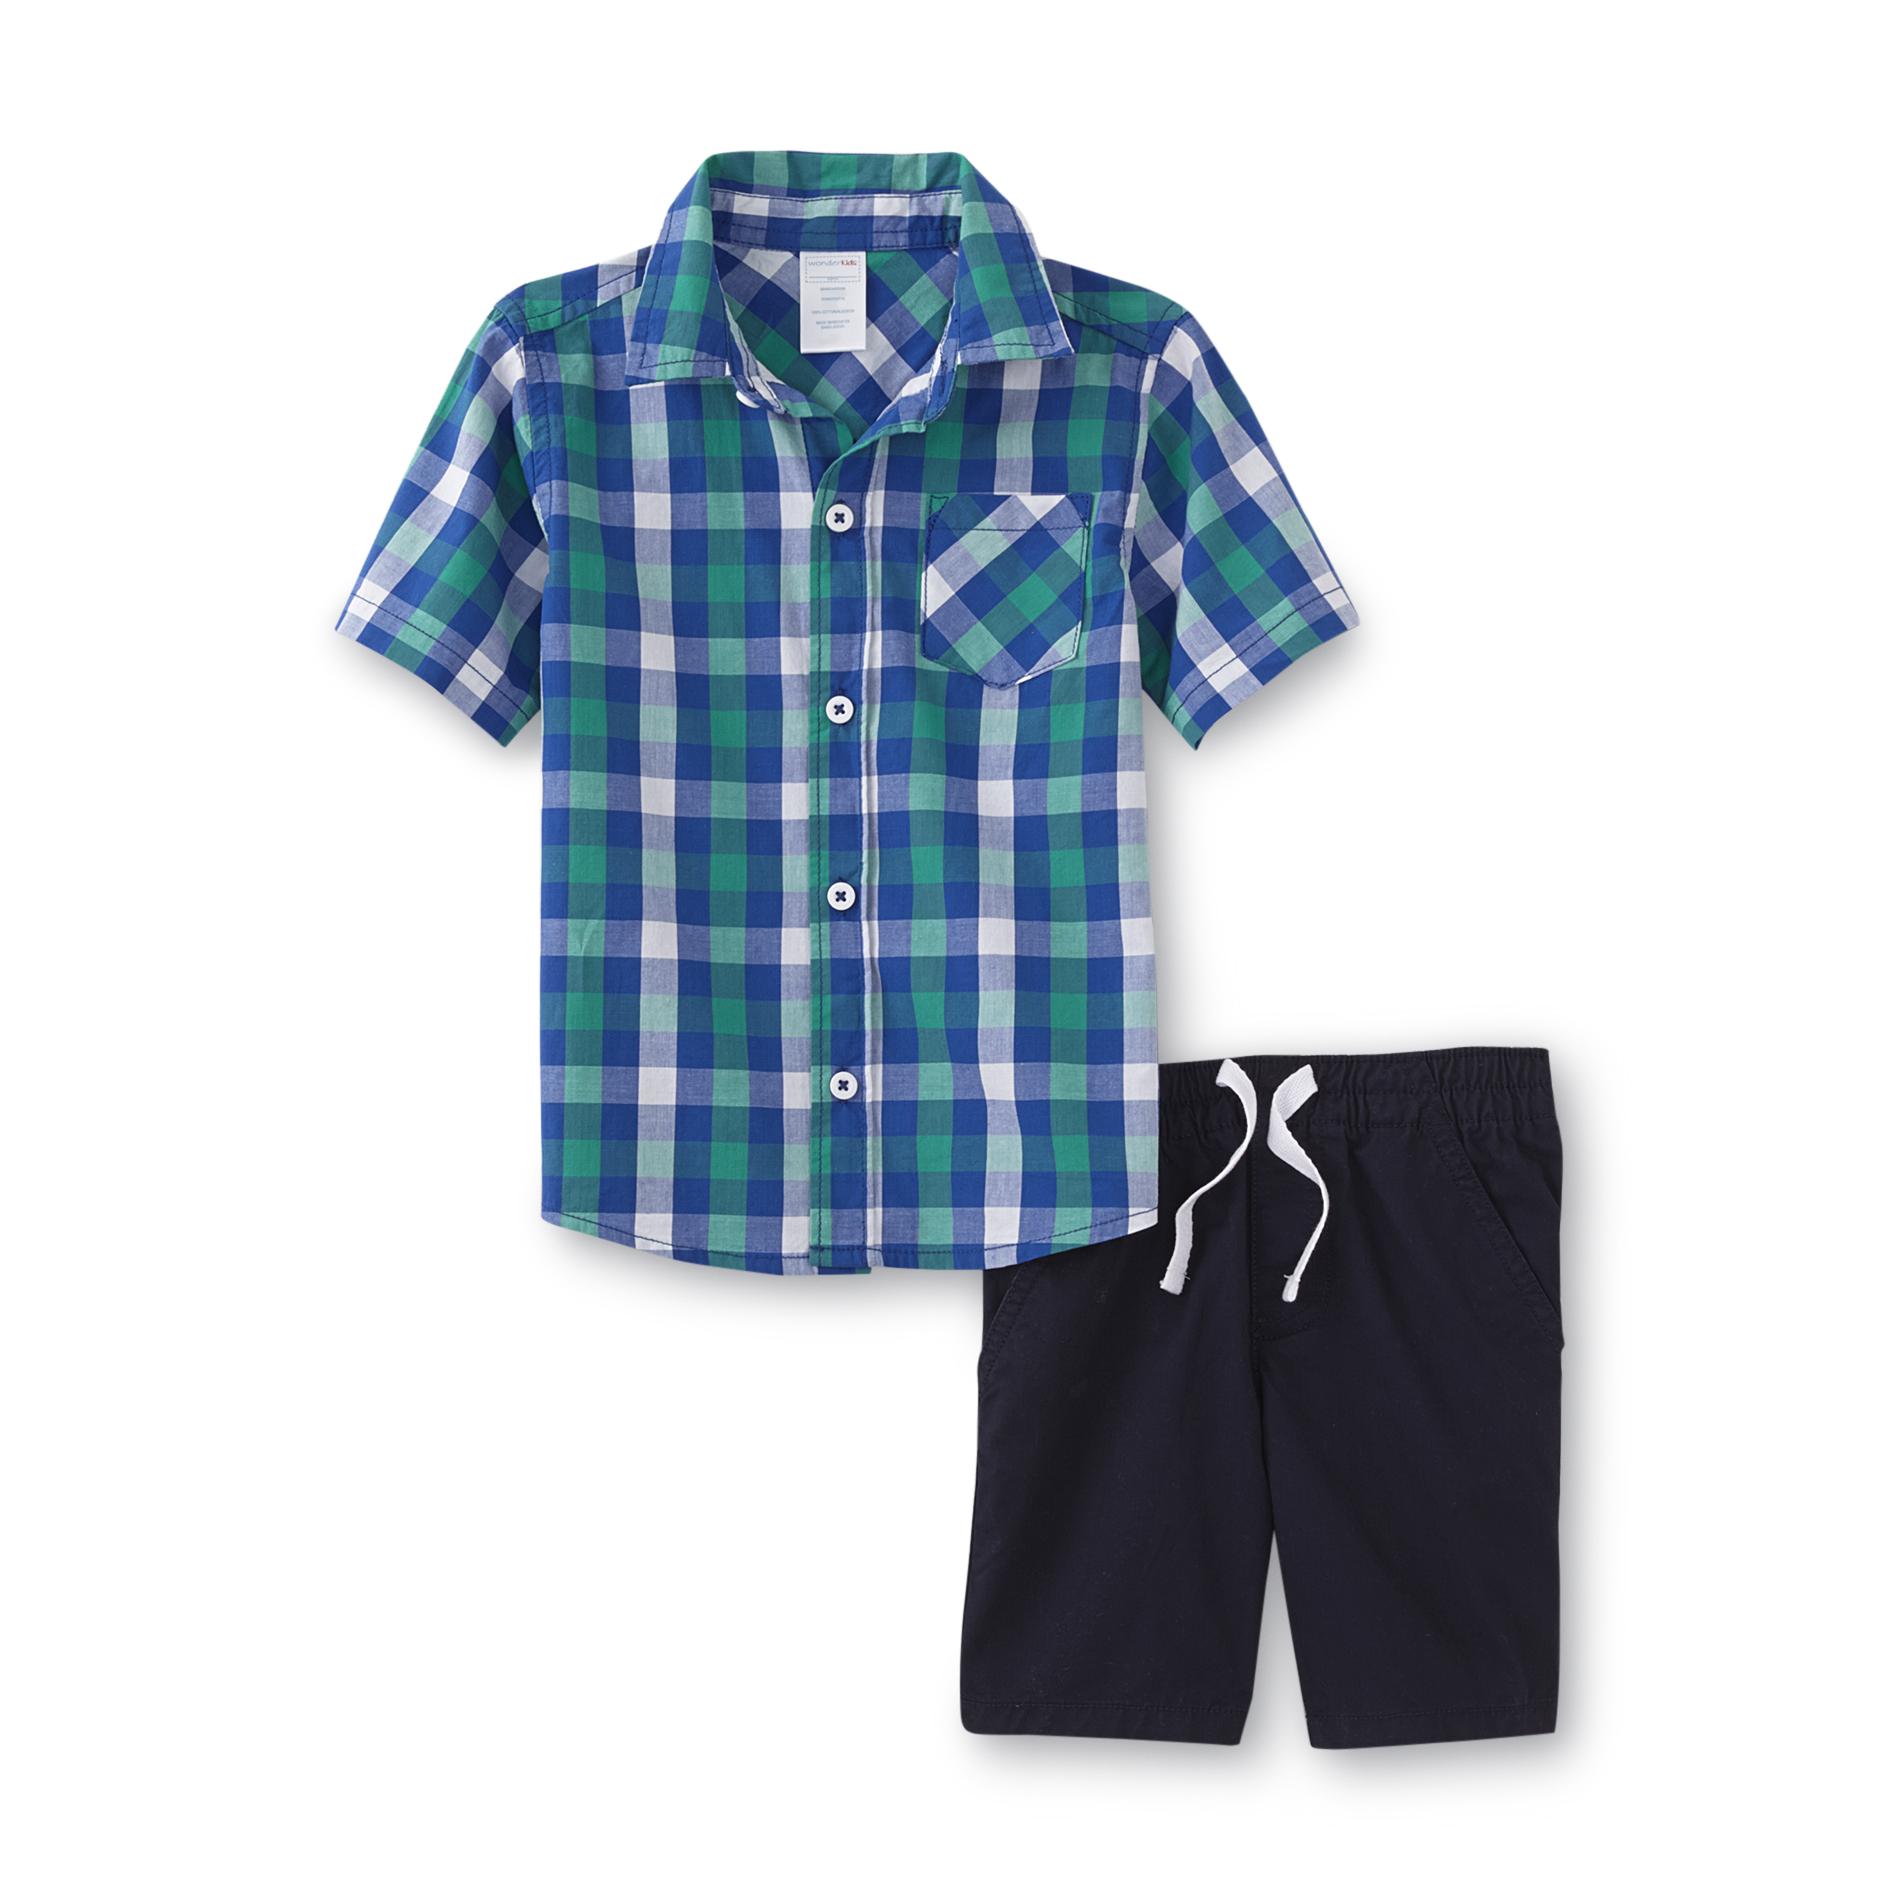 Infant & Toddler Boy's Button-Front Shirt & Shorts - Plaid